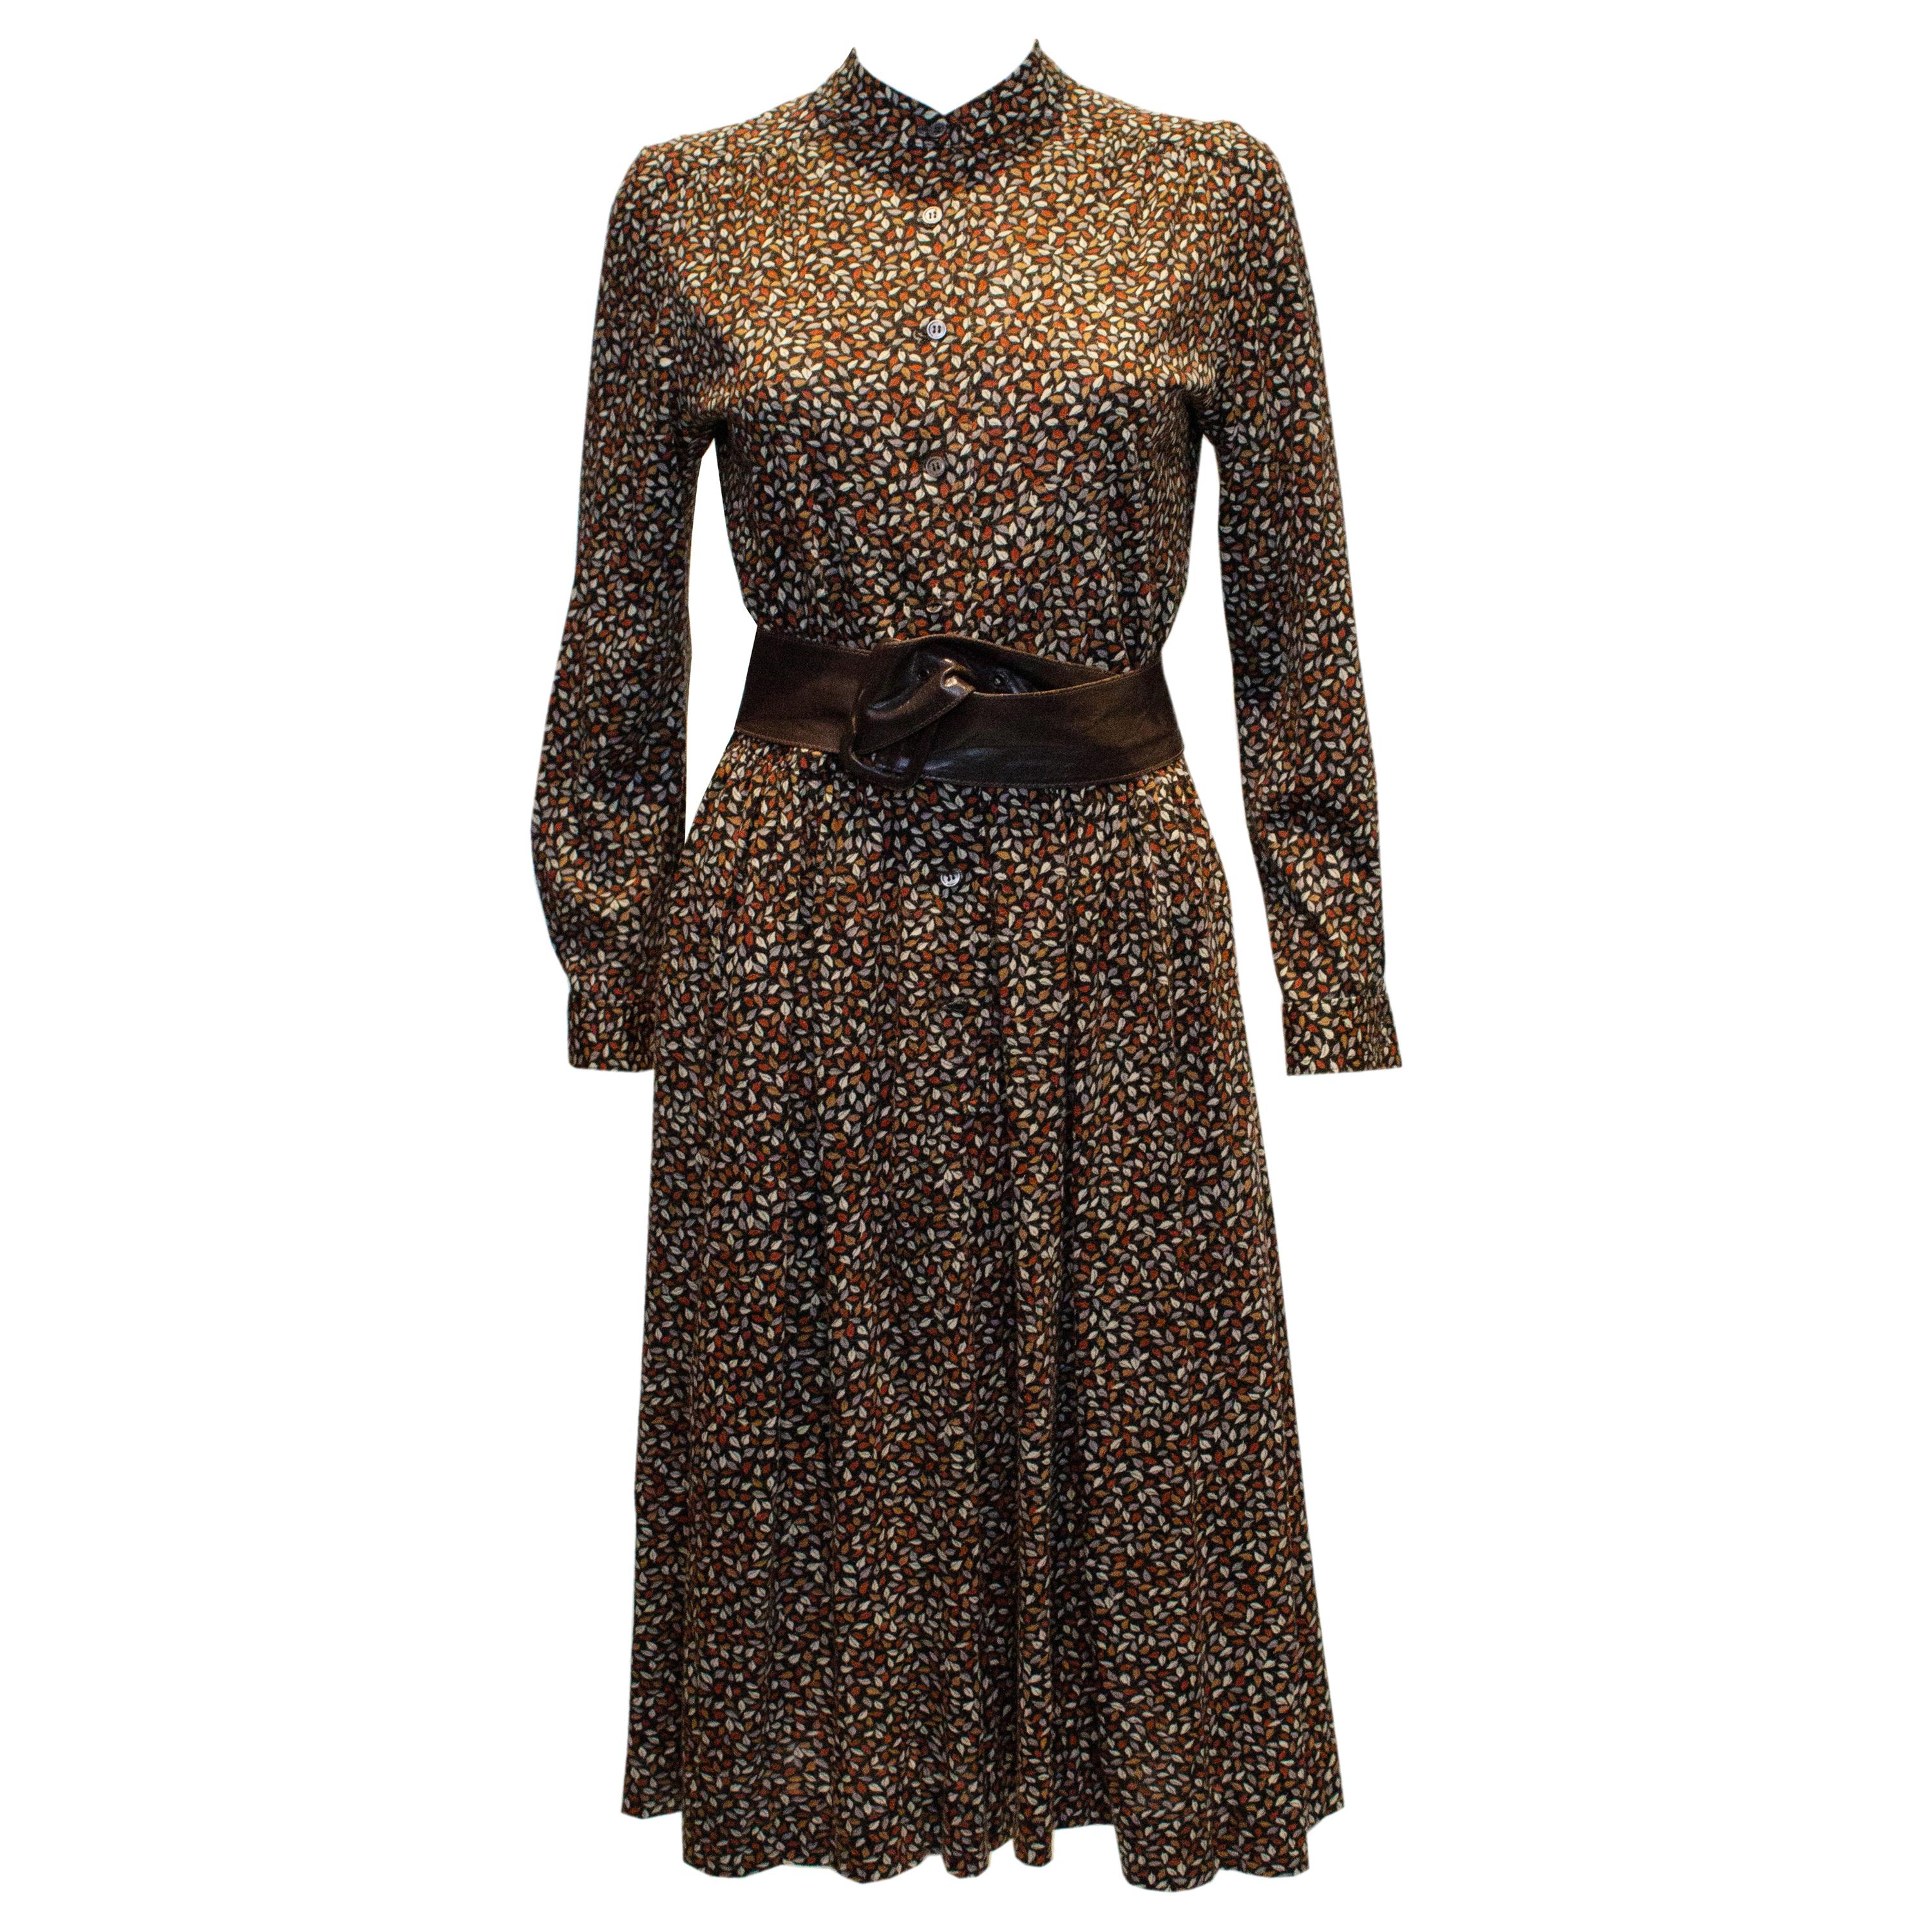 Vintage English Lady Day Dress